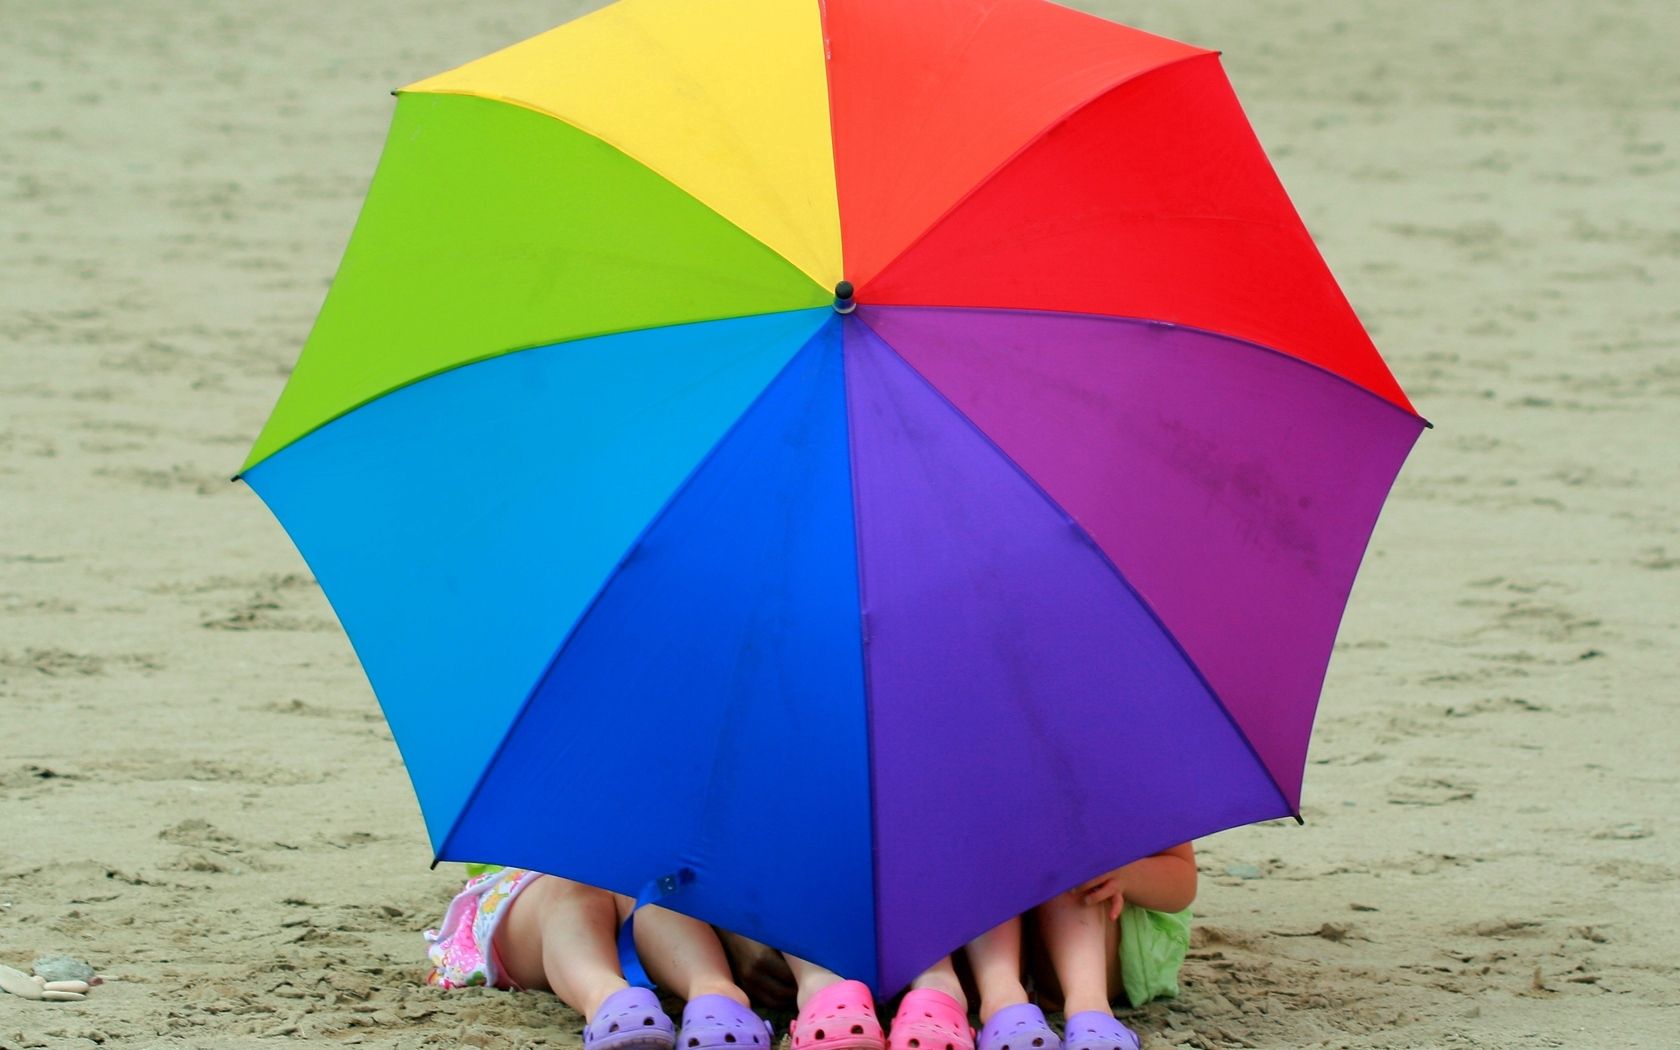 miscellaneous, footwear, umbrella, legs, child, moods, children, coloured, color, miscellanea, mood, nature, beach, summer, girls